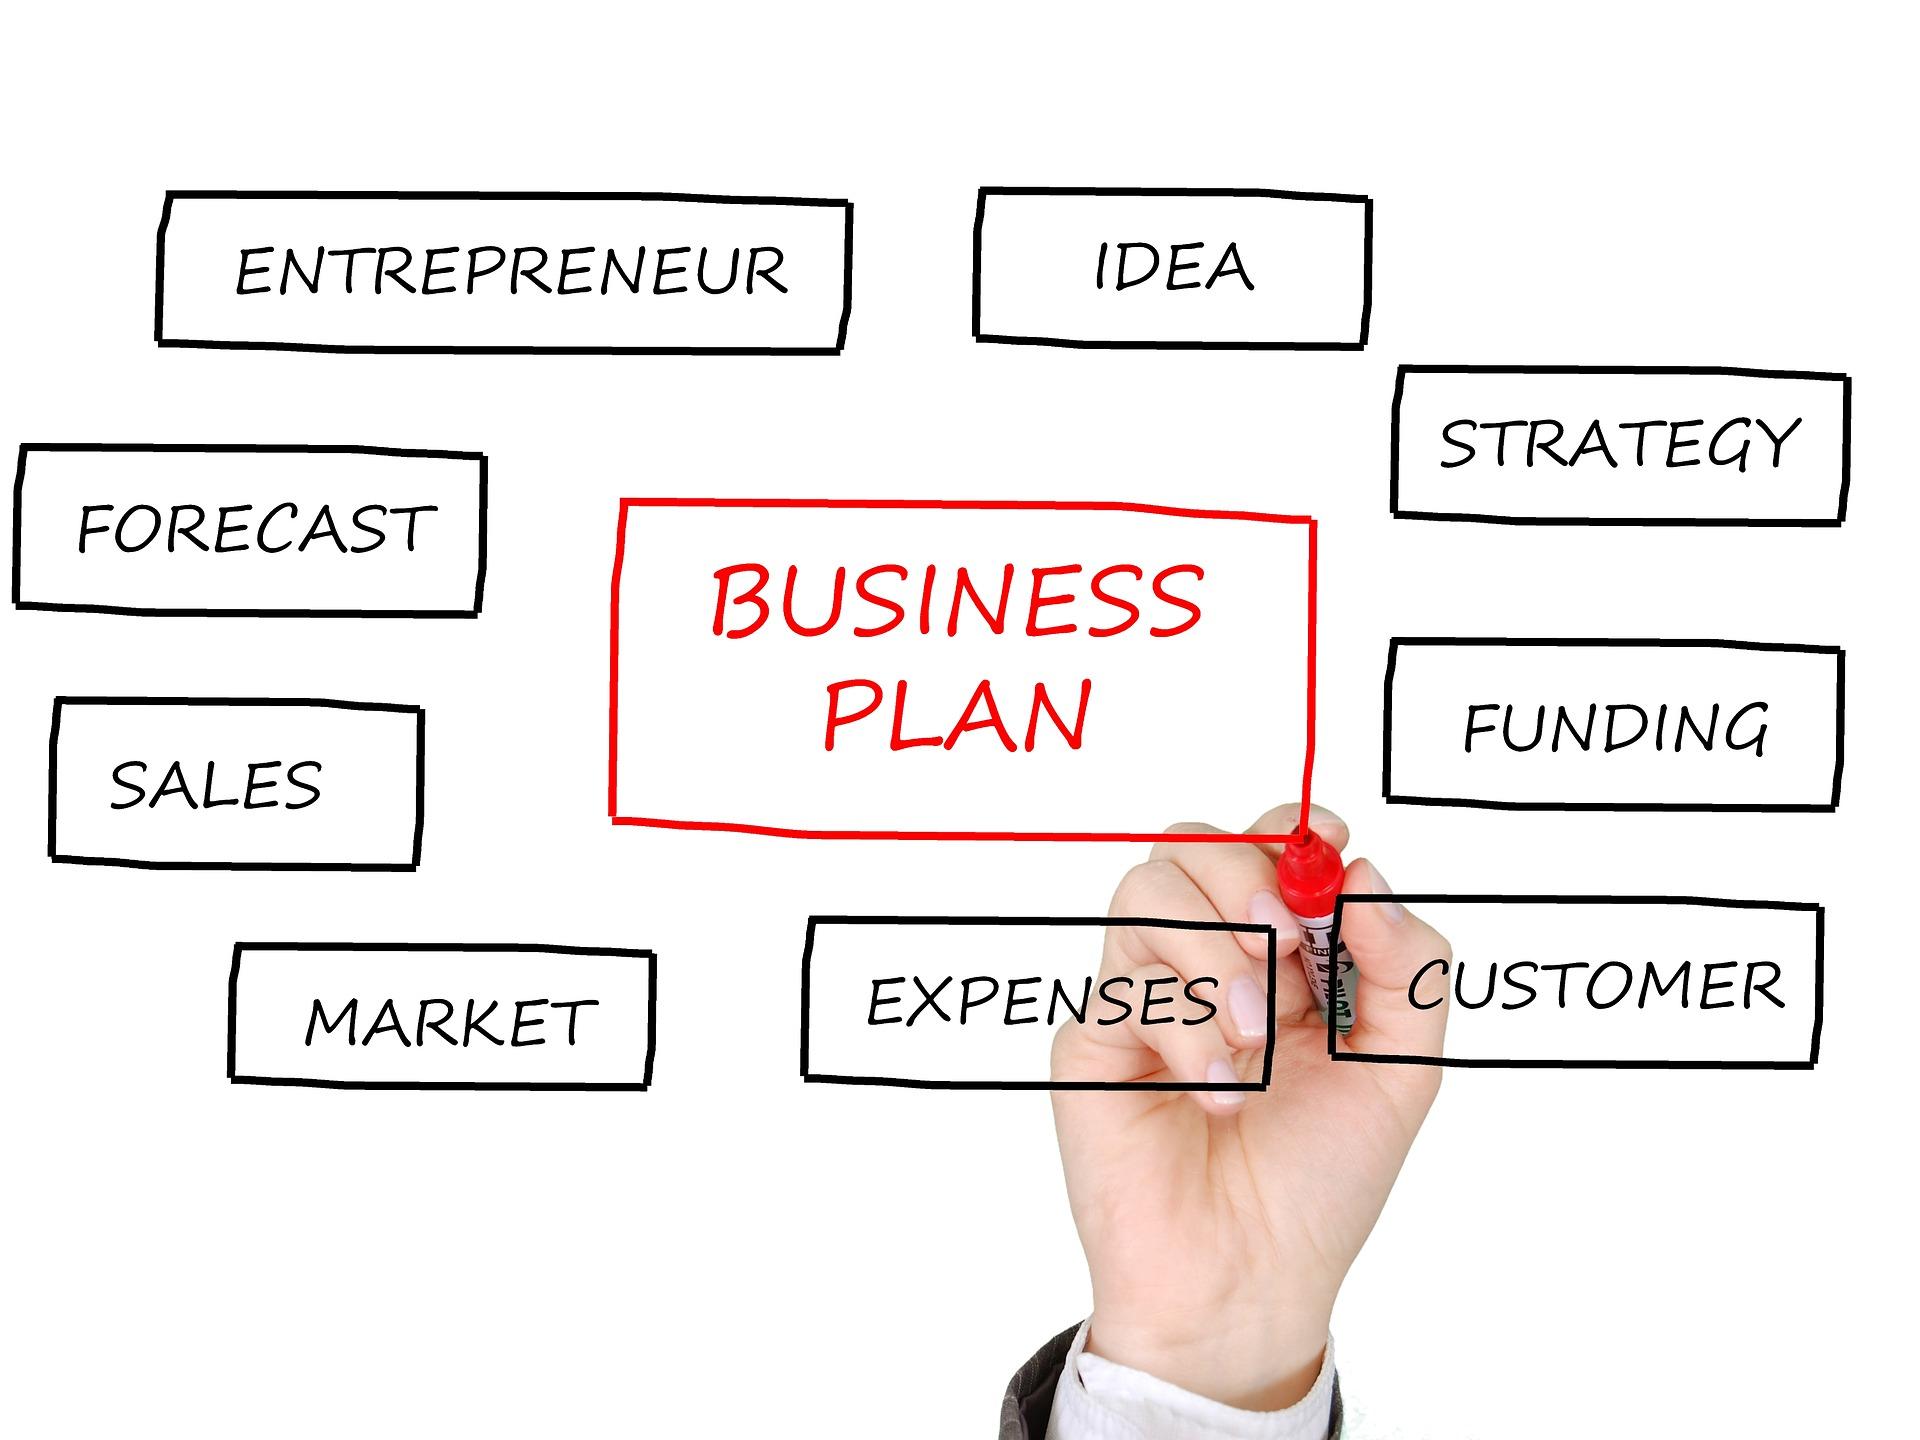 https://bauergriffith.com/wp-content/uploads/2013/07/business-plan-2.jpg